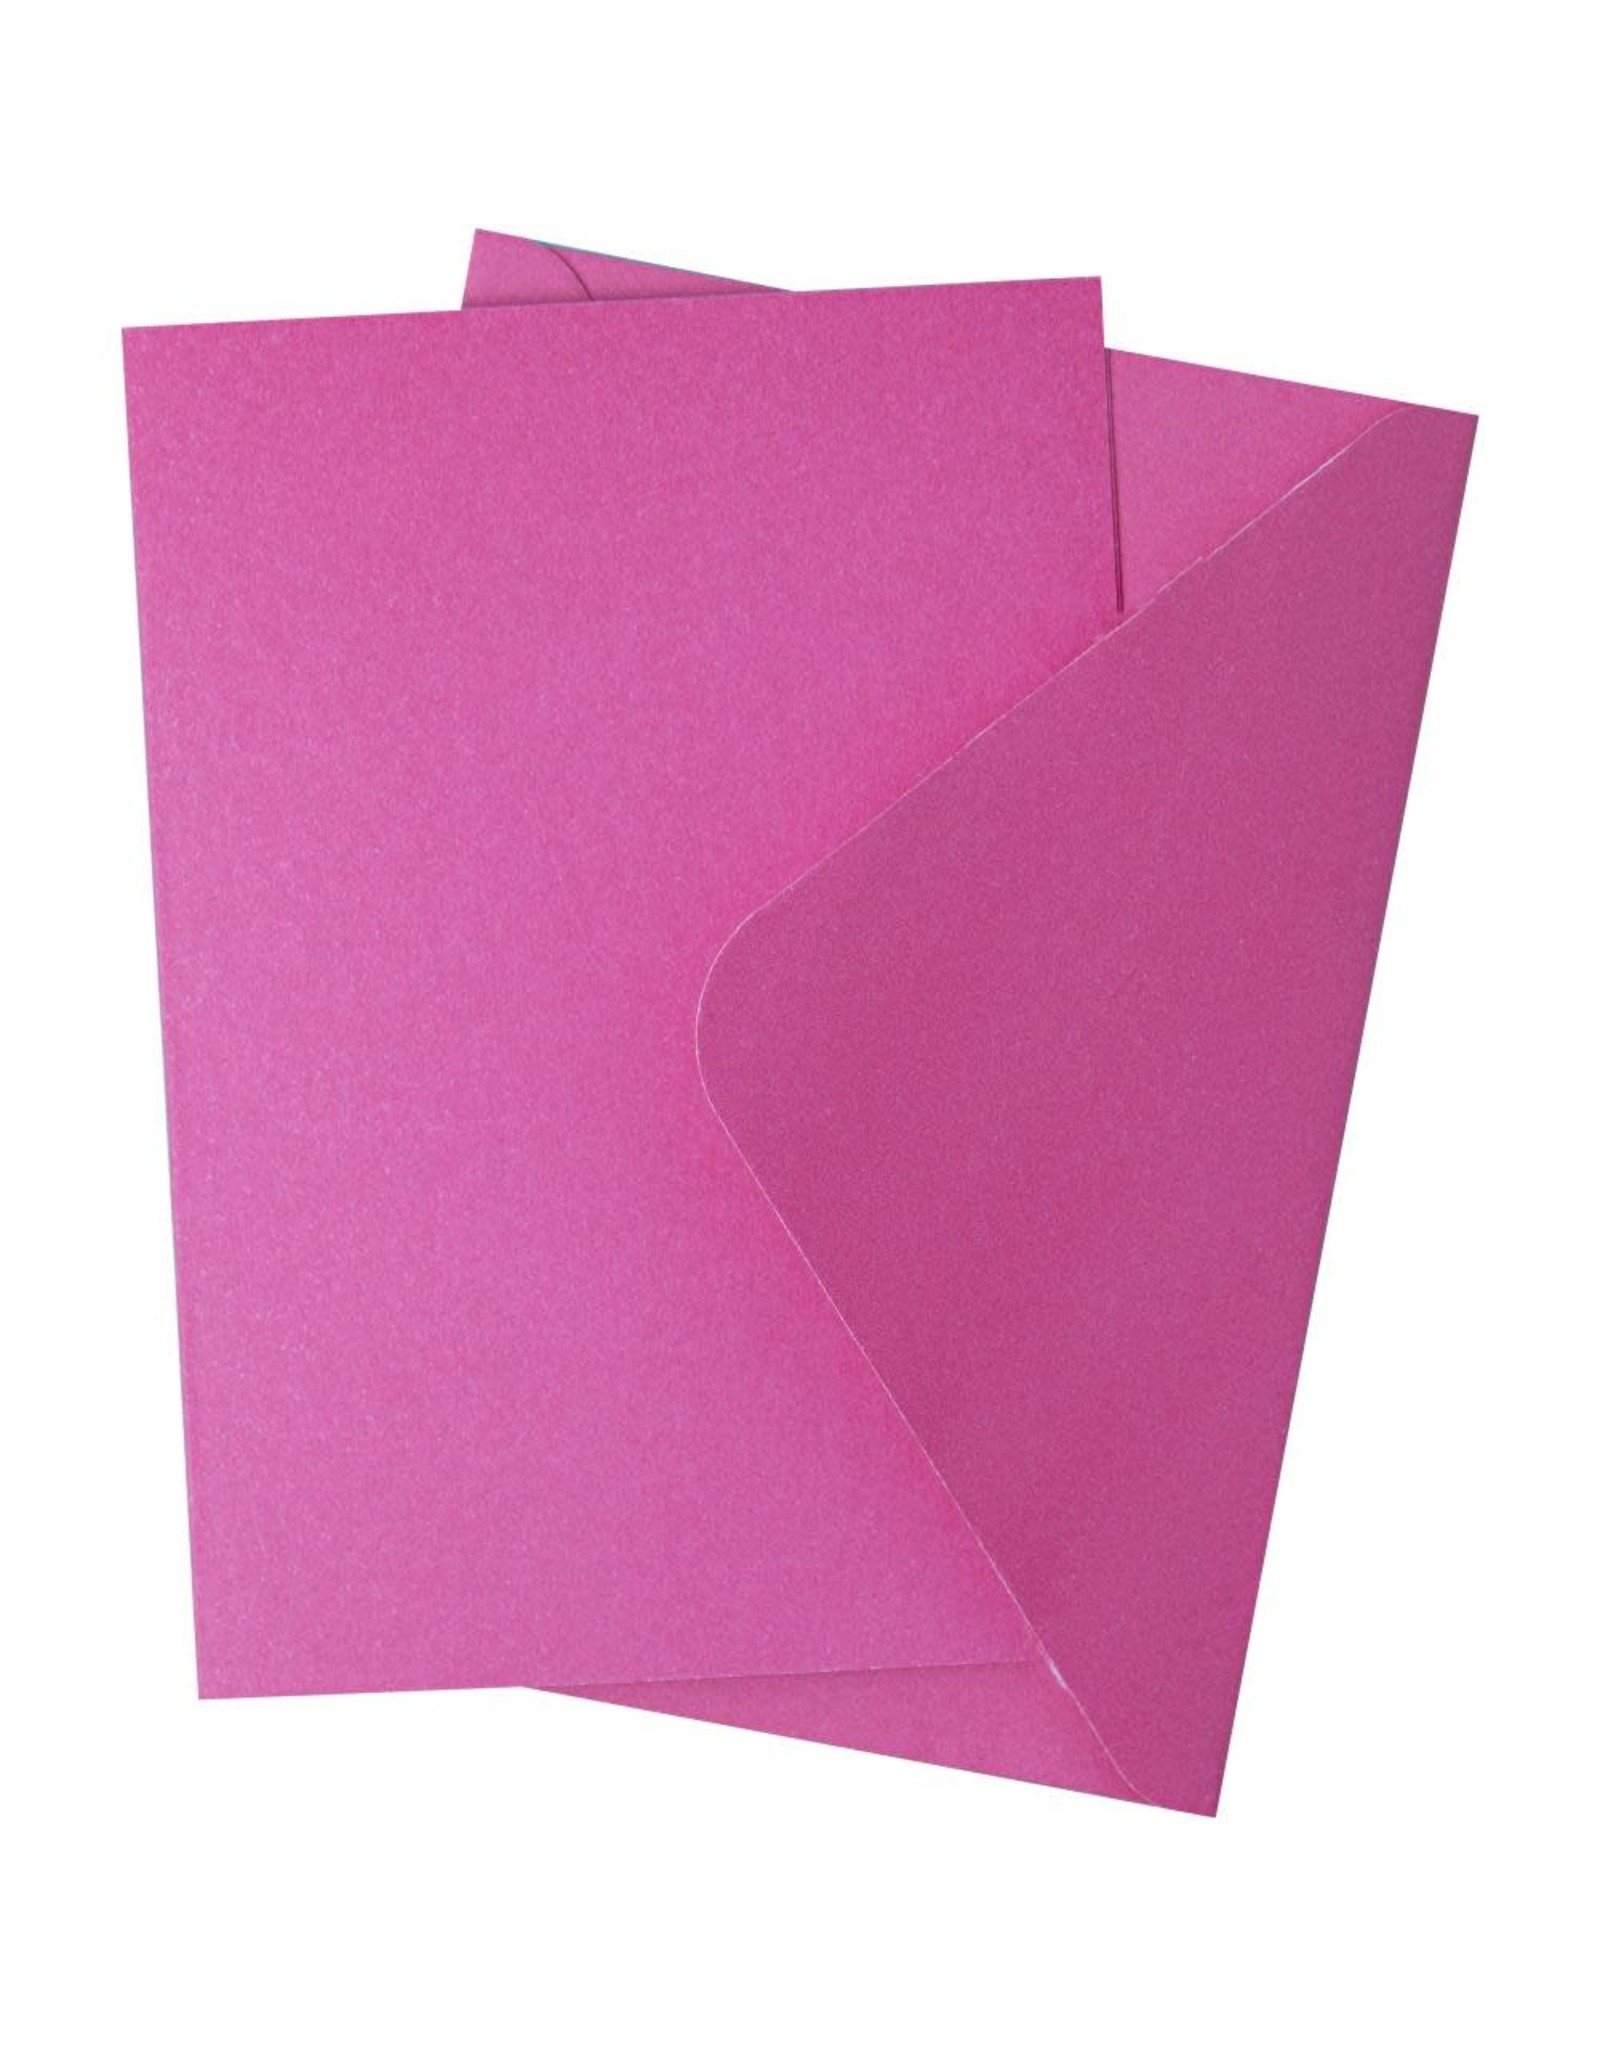 Sizzix Pink Fizz - Card/Envelope A6 10P